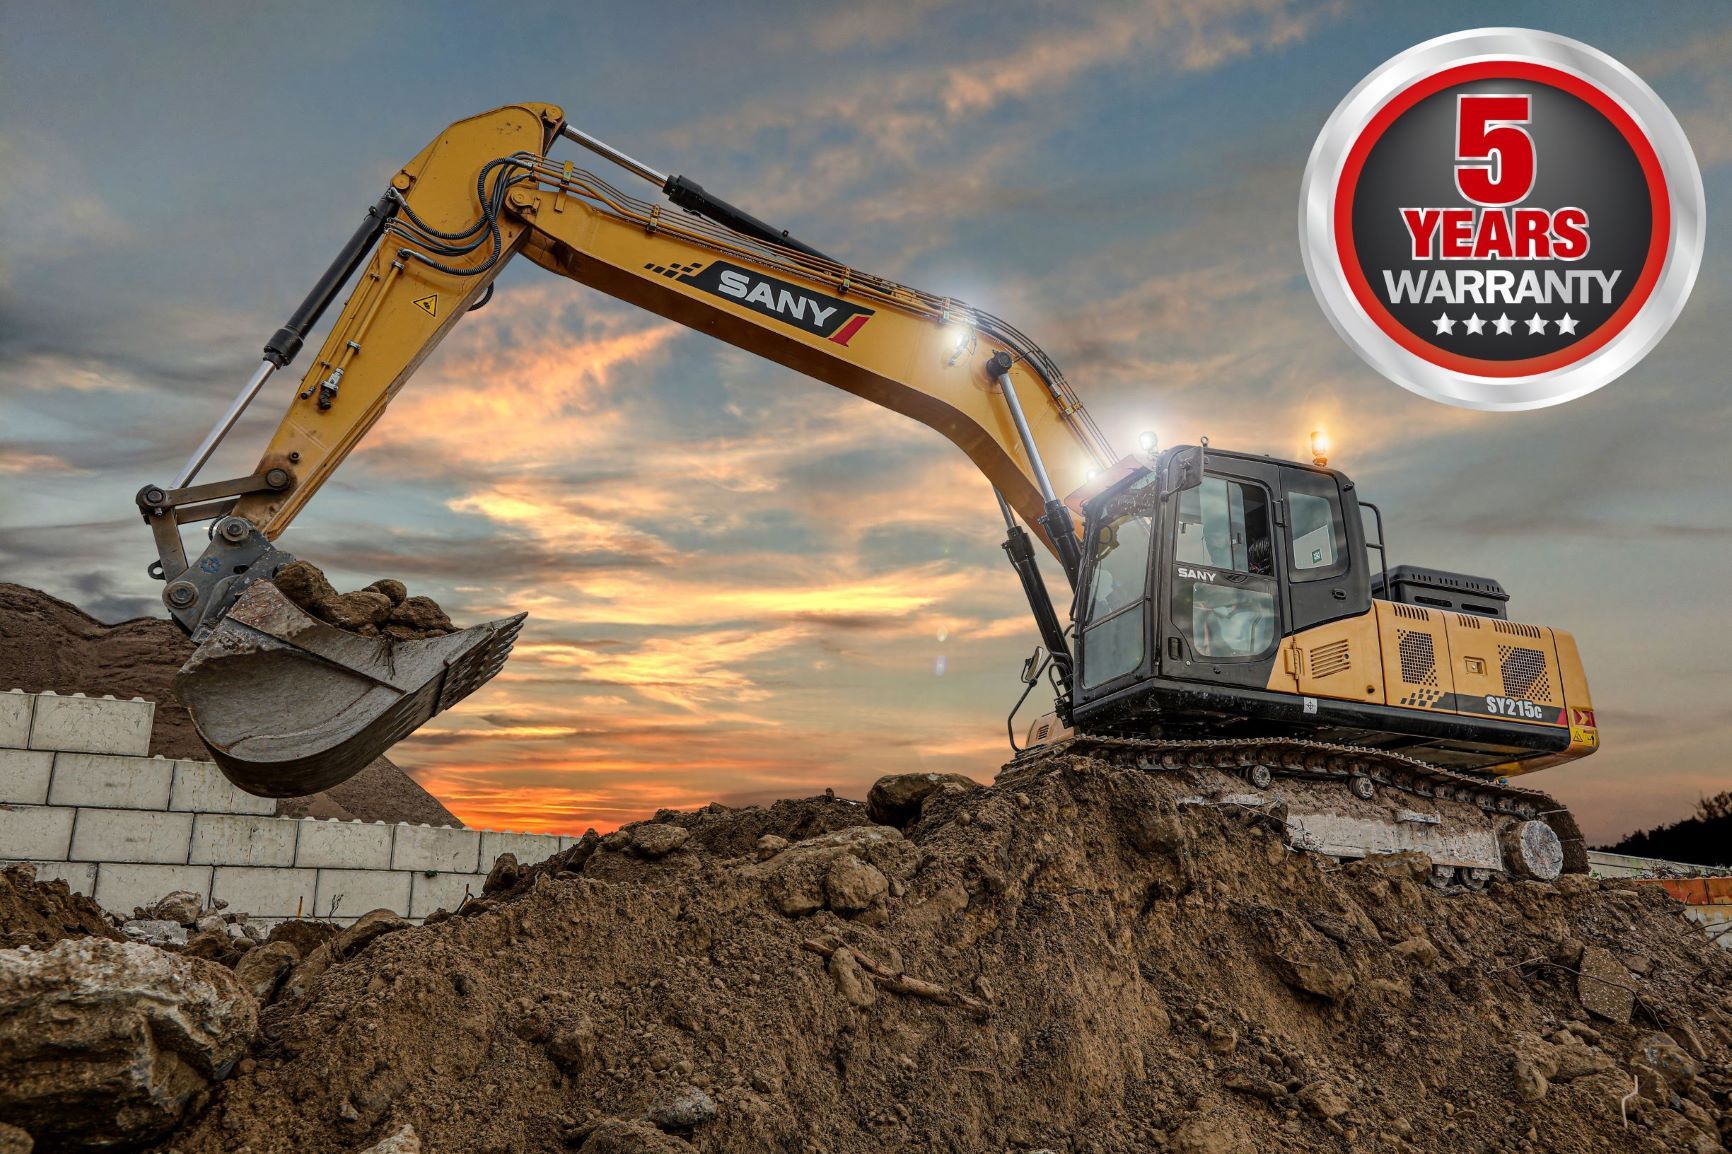 SANY launch five-year warranty on full excavator range